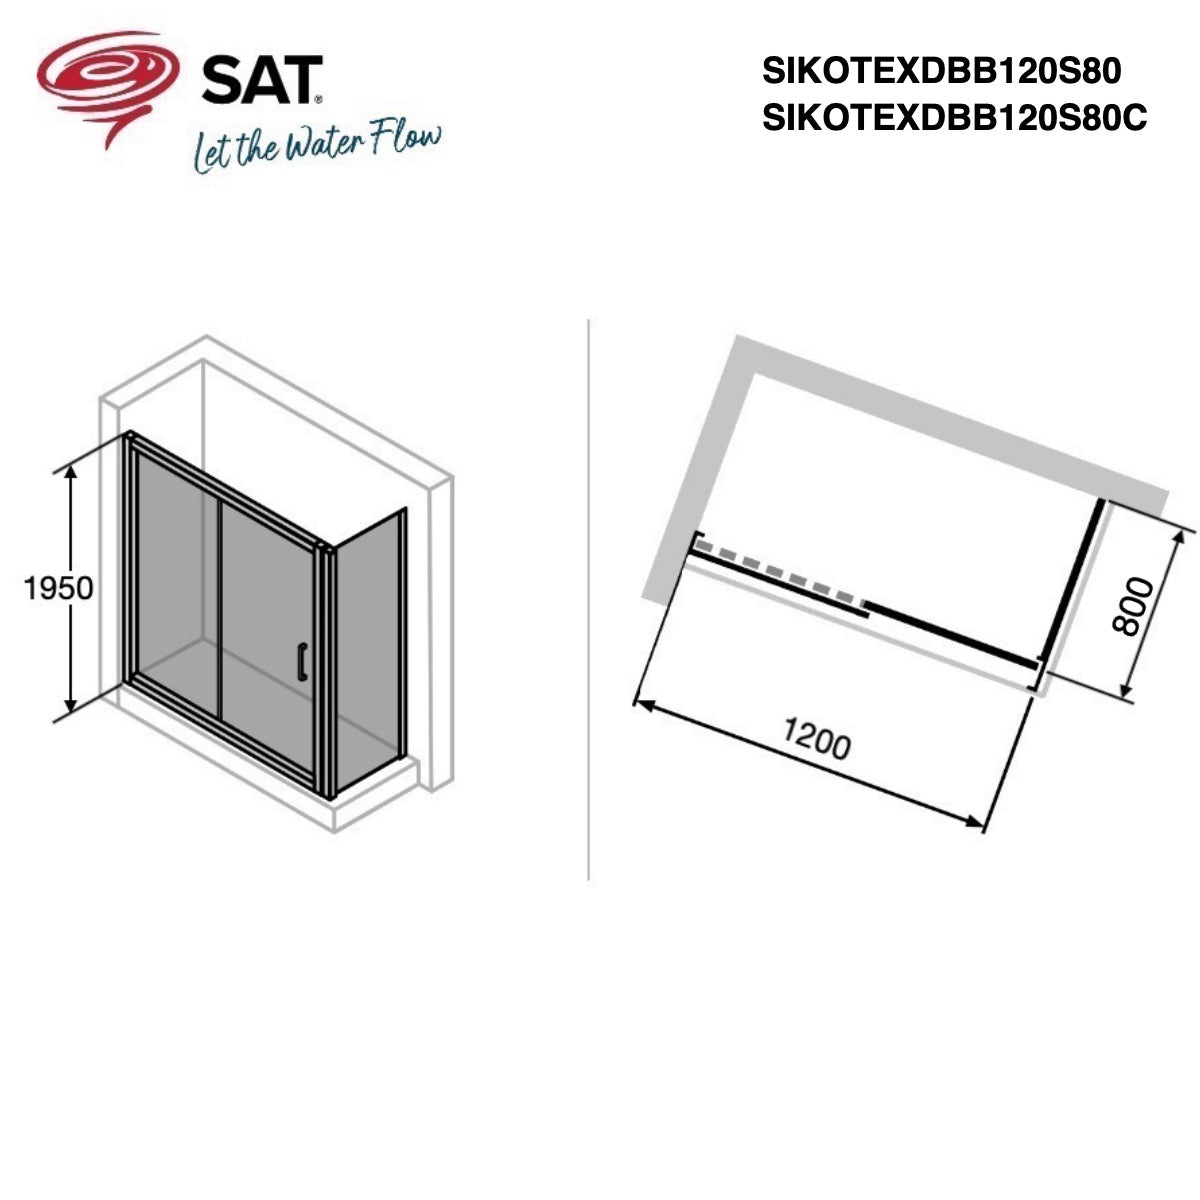 SIKOTEXDBB120S80 SAT TEX 120 x 80 cm pravokotna tuš kabina brez okvirja